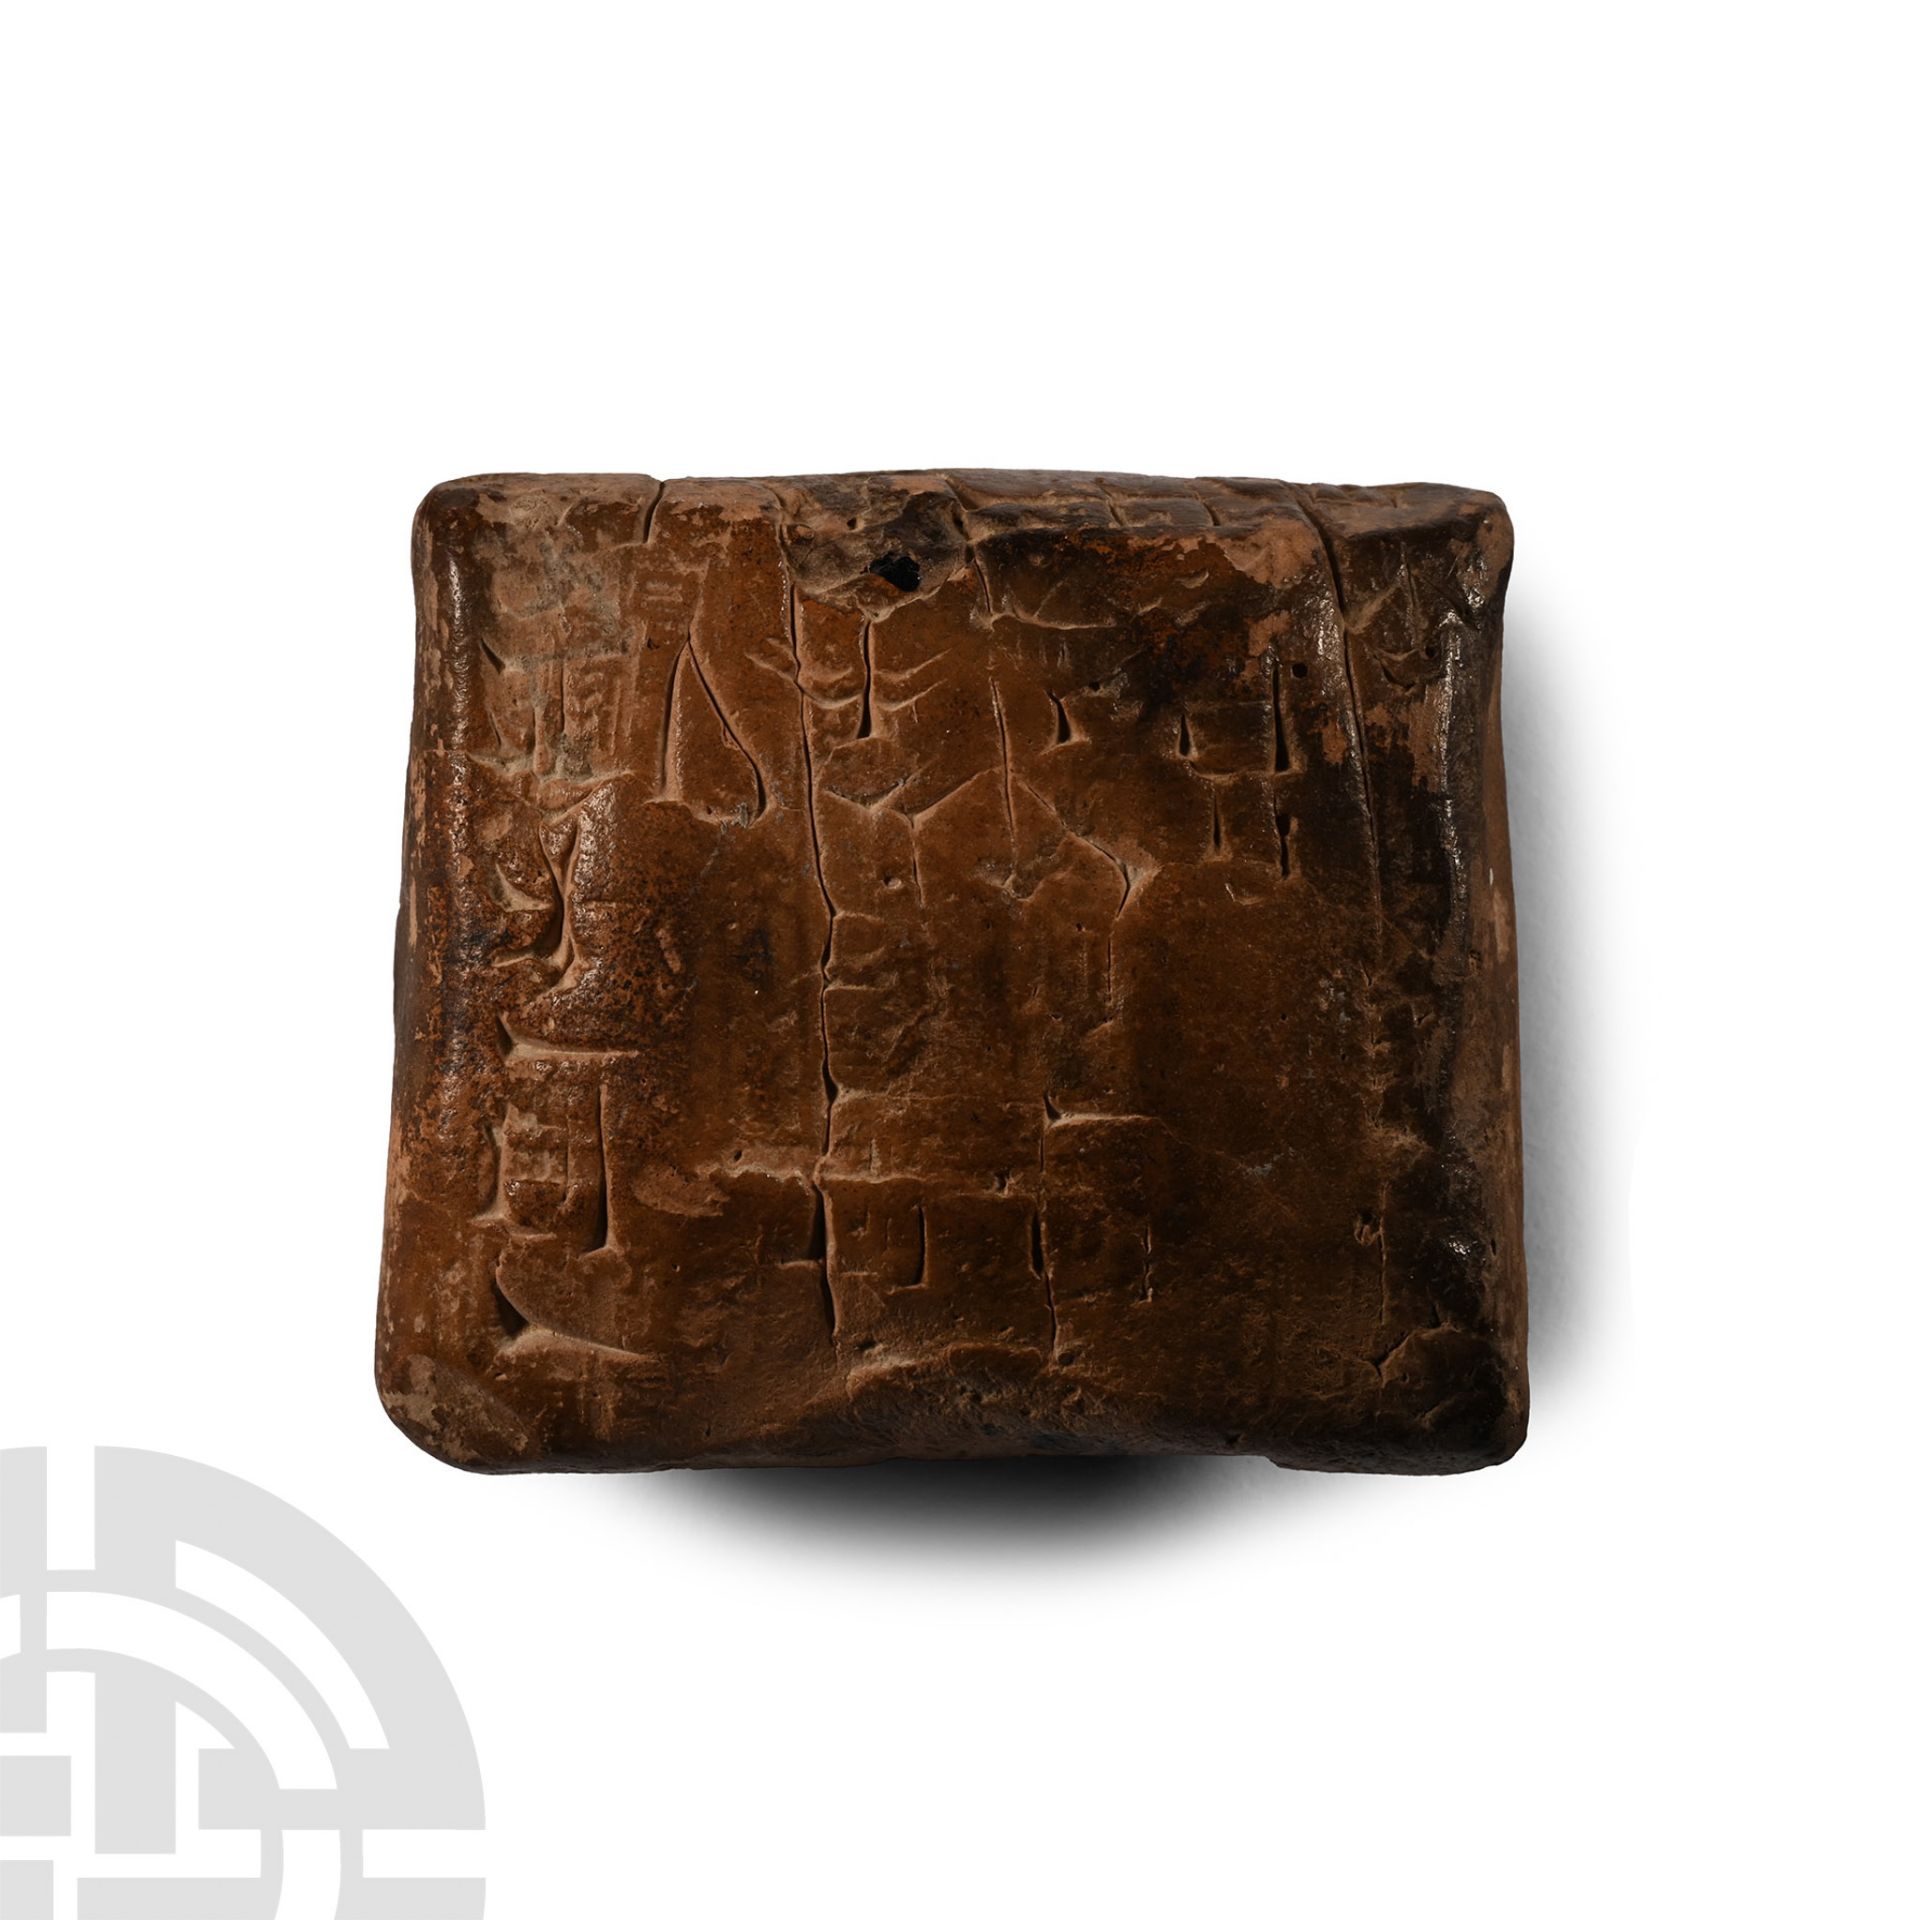 Proto-Sumerian Terracotta Pictographic Tablet